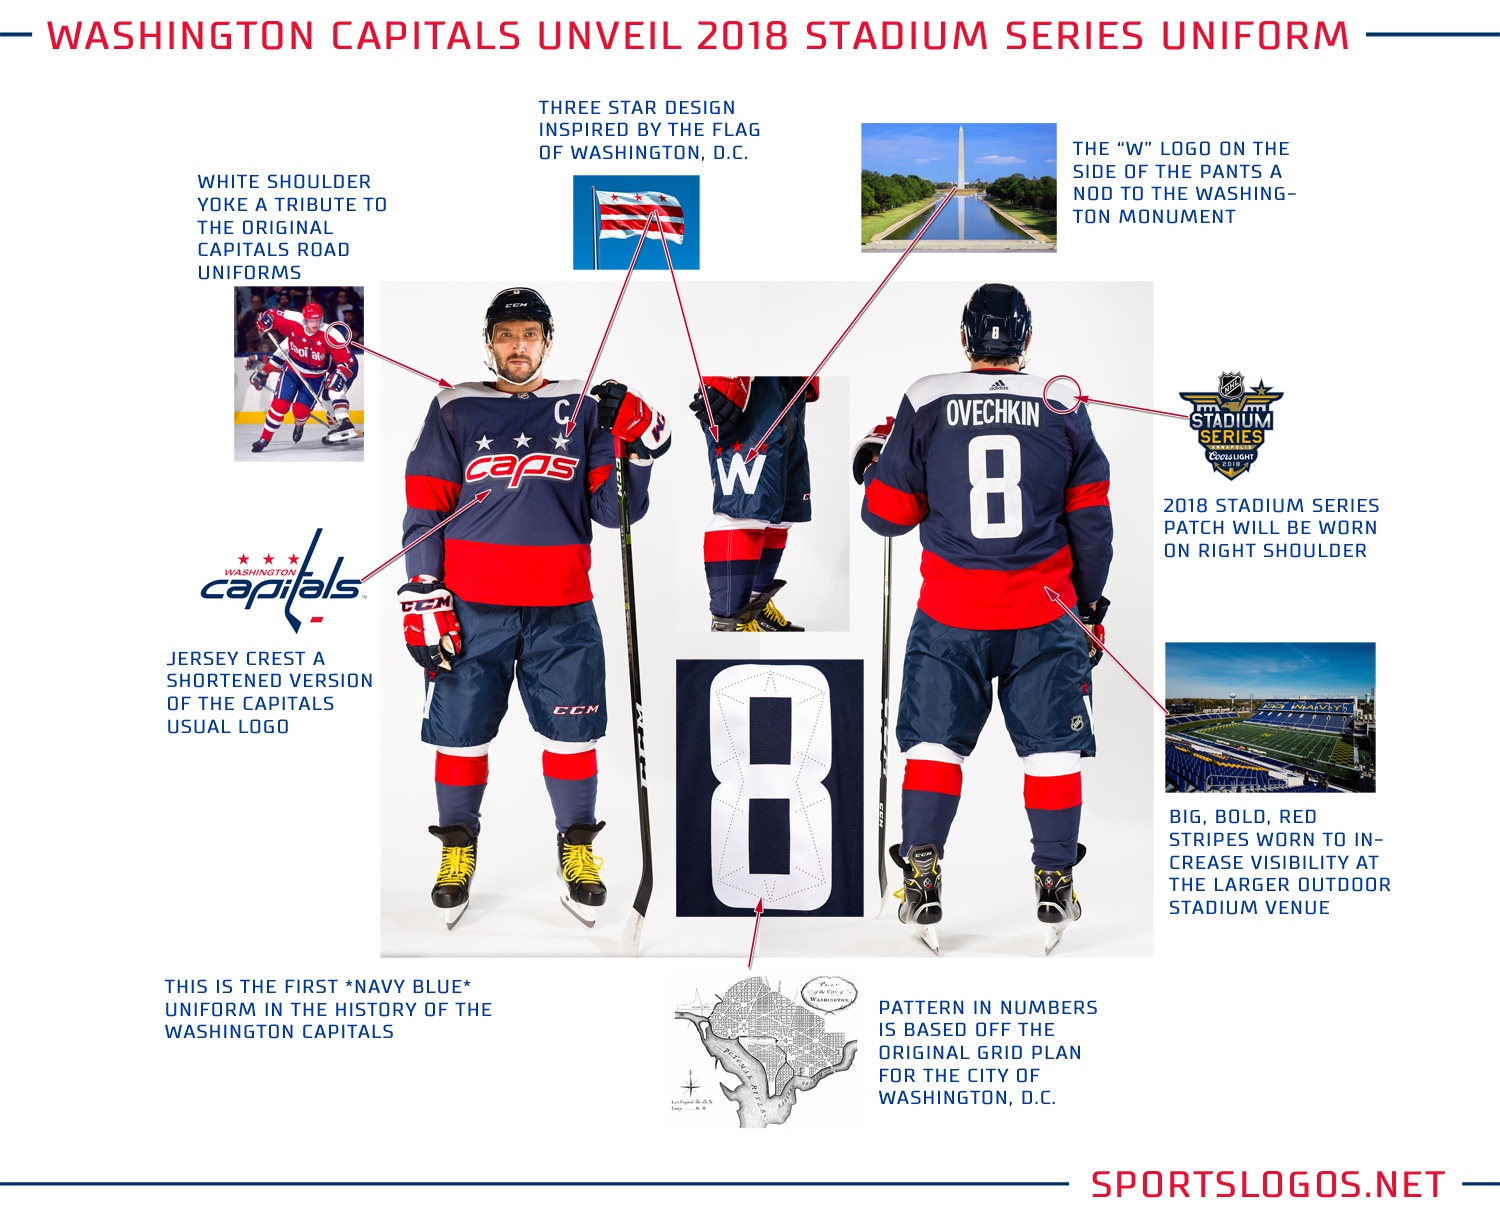 New Capitals Stadium Series jerseys feature Weagle